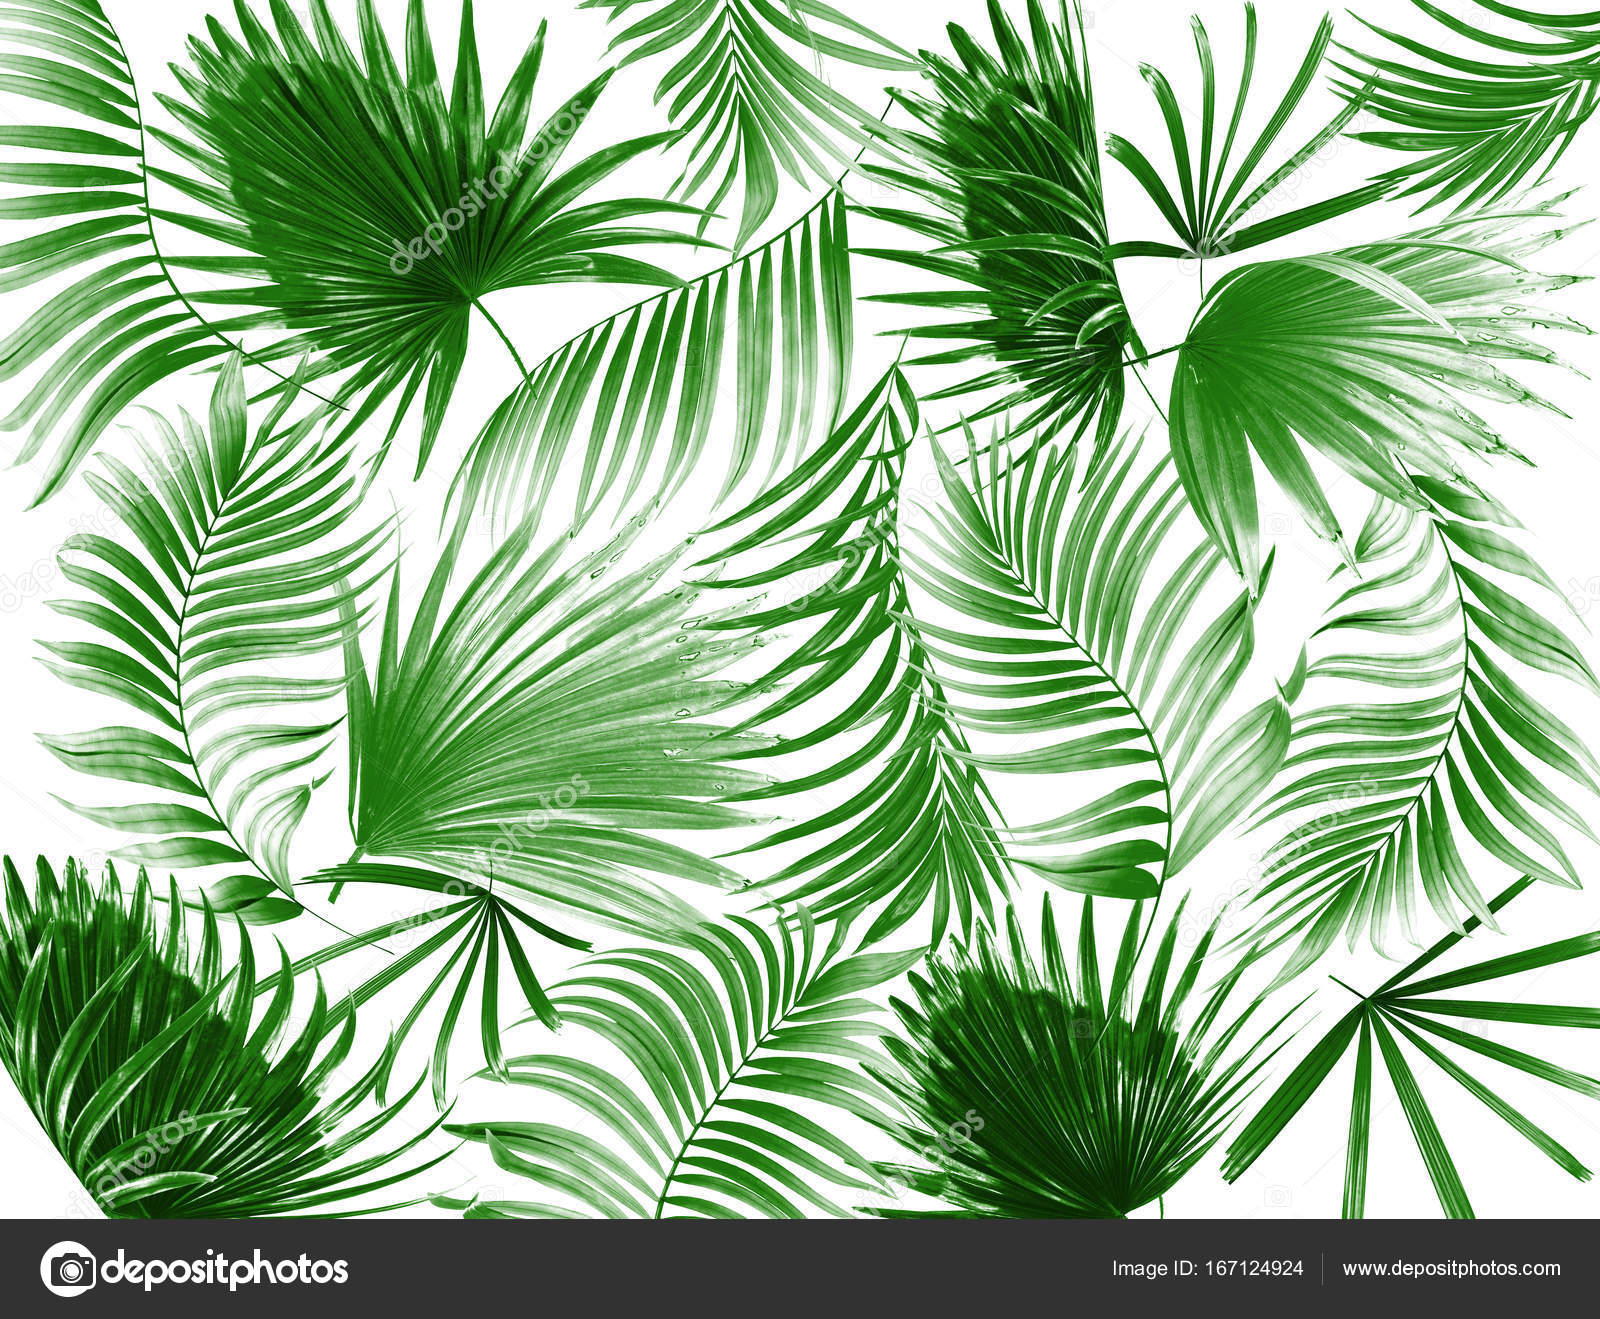 Green leaf of palm tree background — Stock Photo © studio2013 #167124924